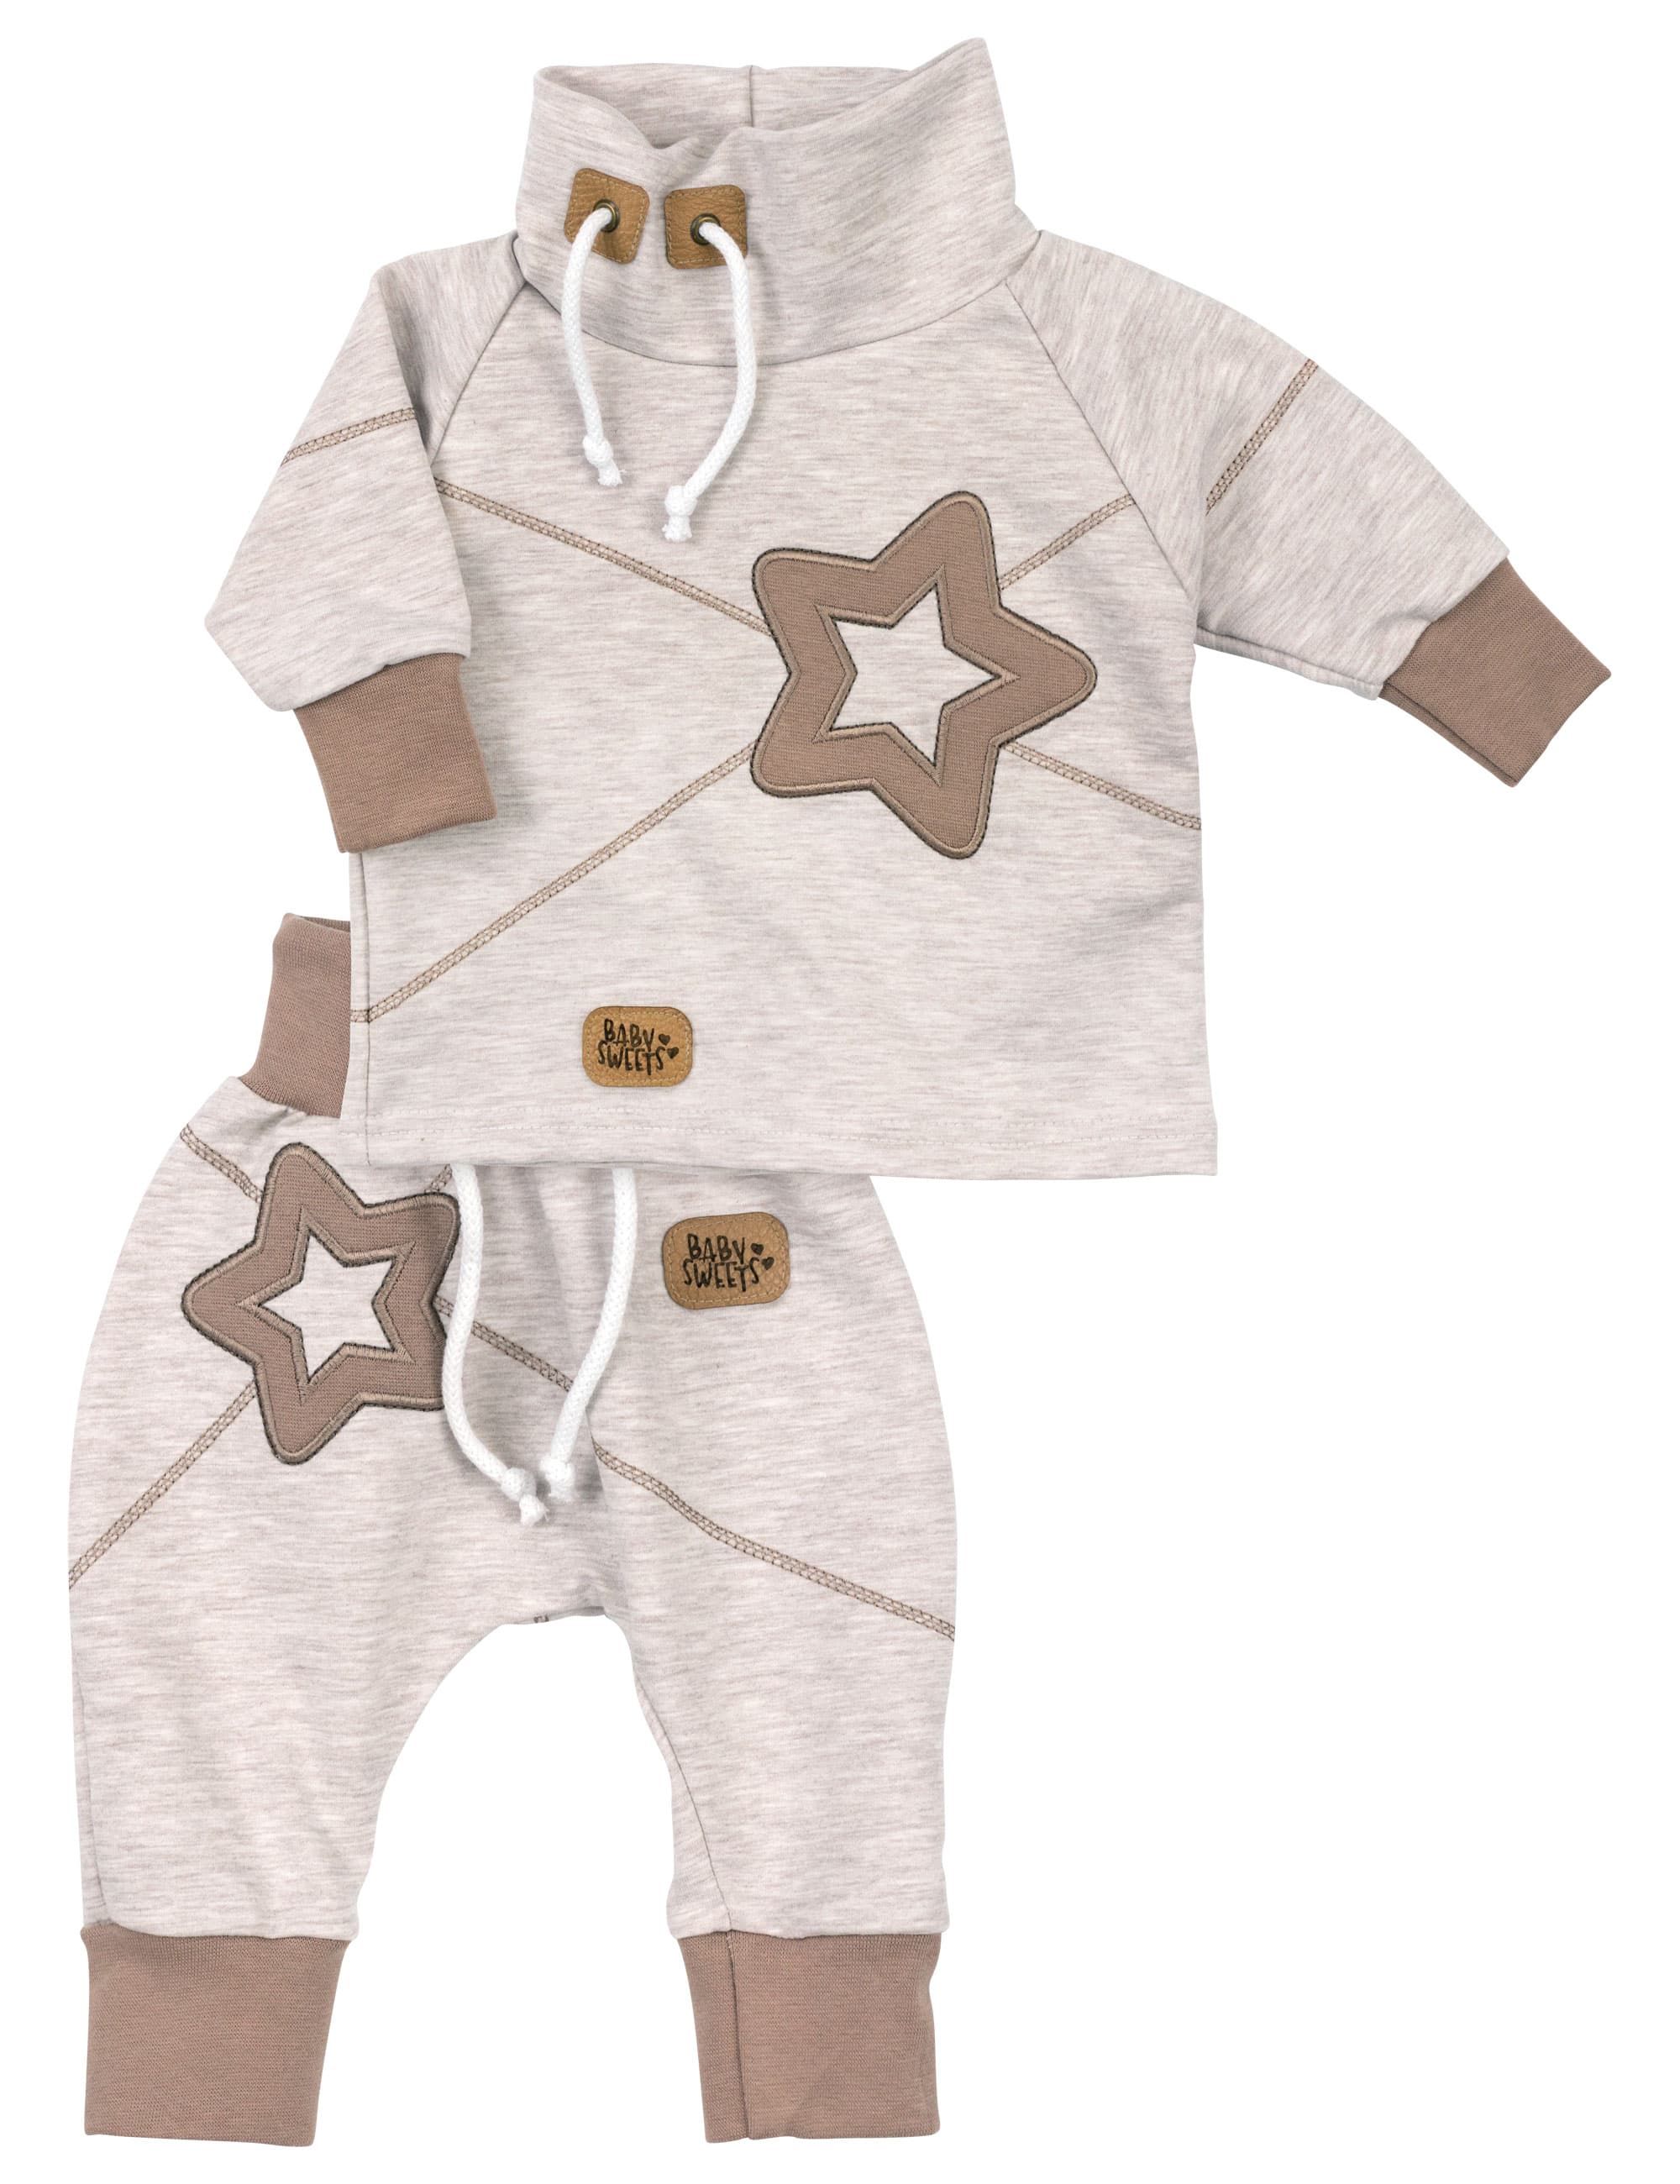 Baby Jungen Mädchen Set Shirt Strampler 2 Teile Neugeborene Outfit Wolken 68 74 